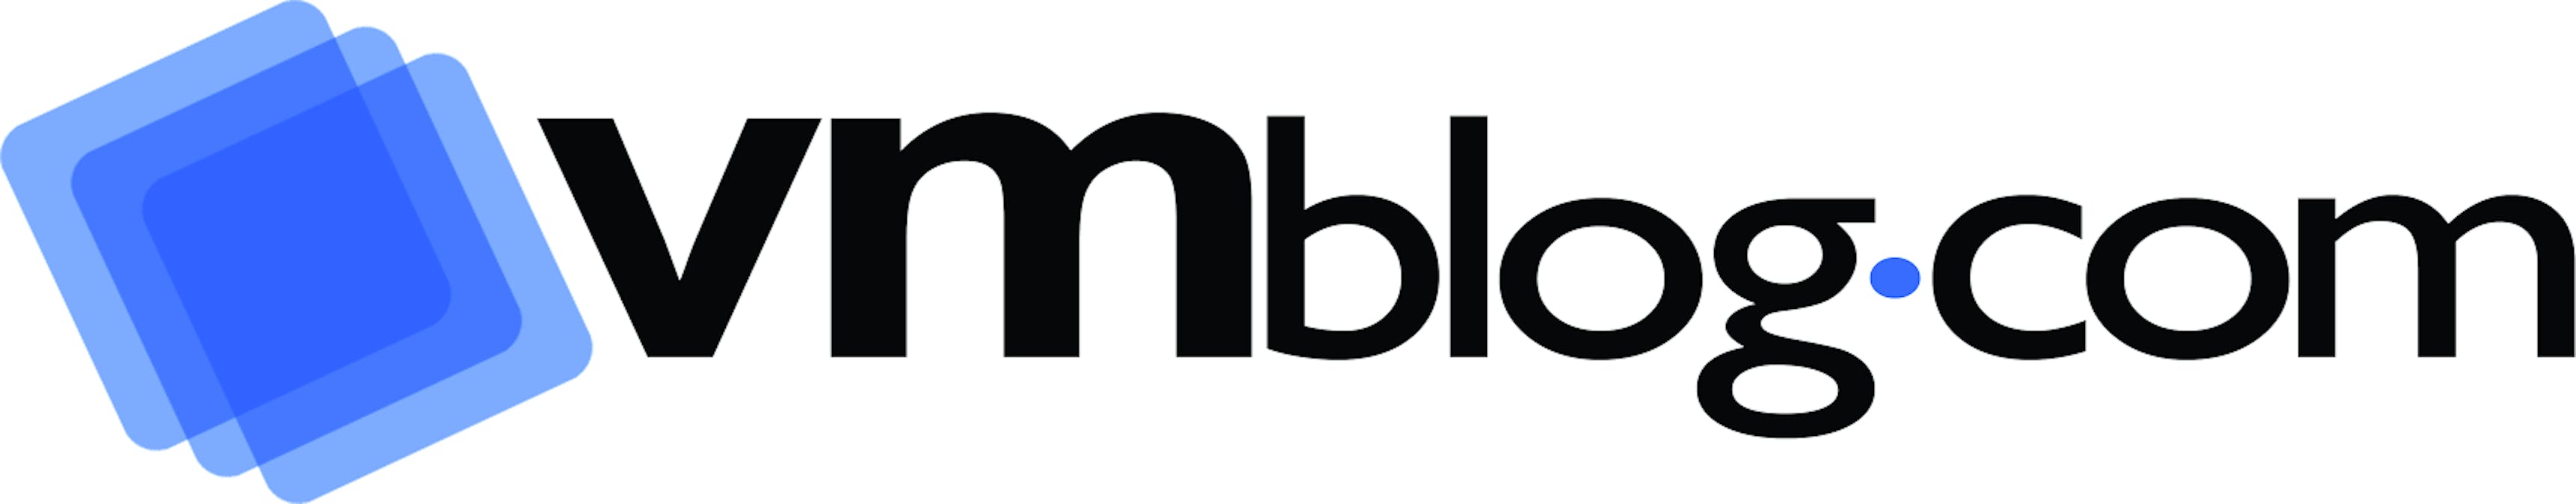 VMblog logo